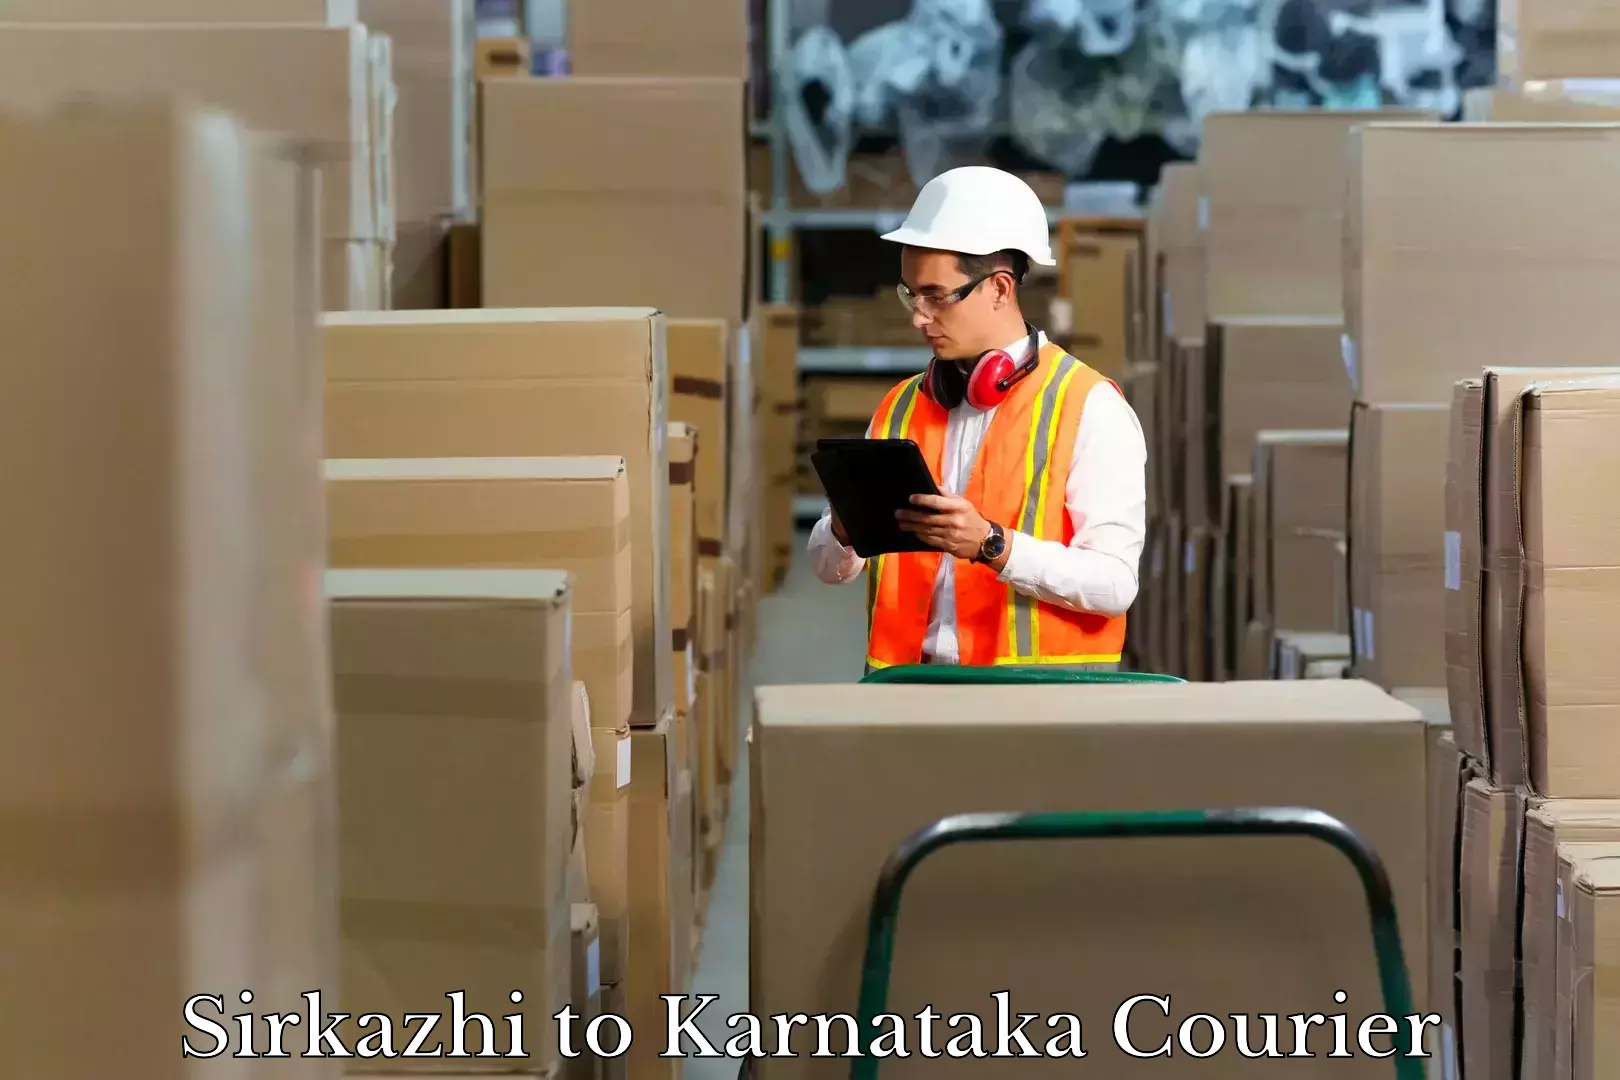 Luggage transport consultancy Sirkazhi to Karnataka